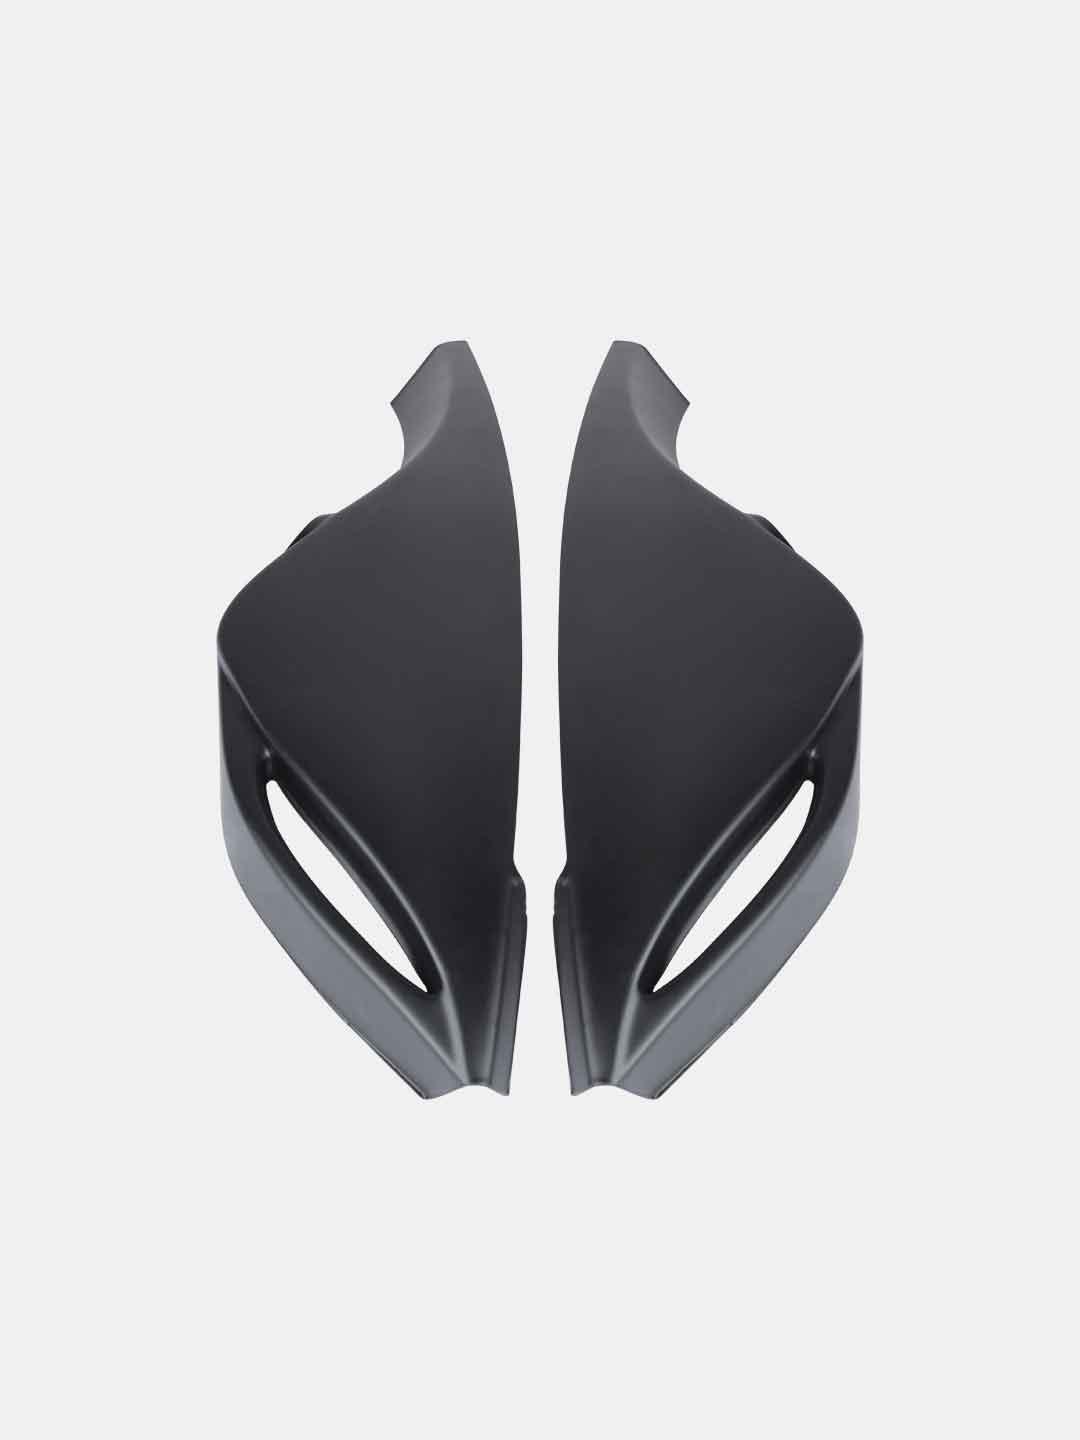 Yamaha R15 V3 Dark Knight Windscreen Fairing Kit - Moto Modz